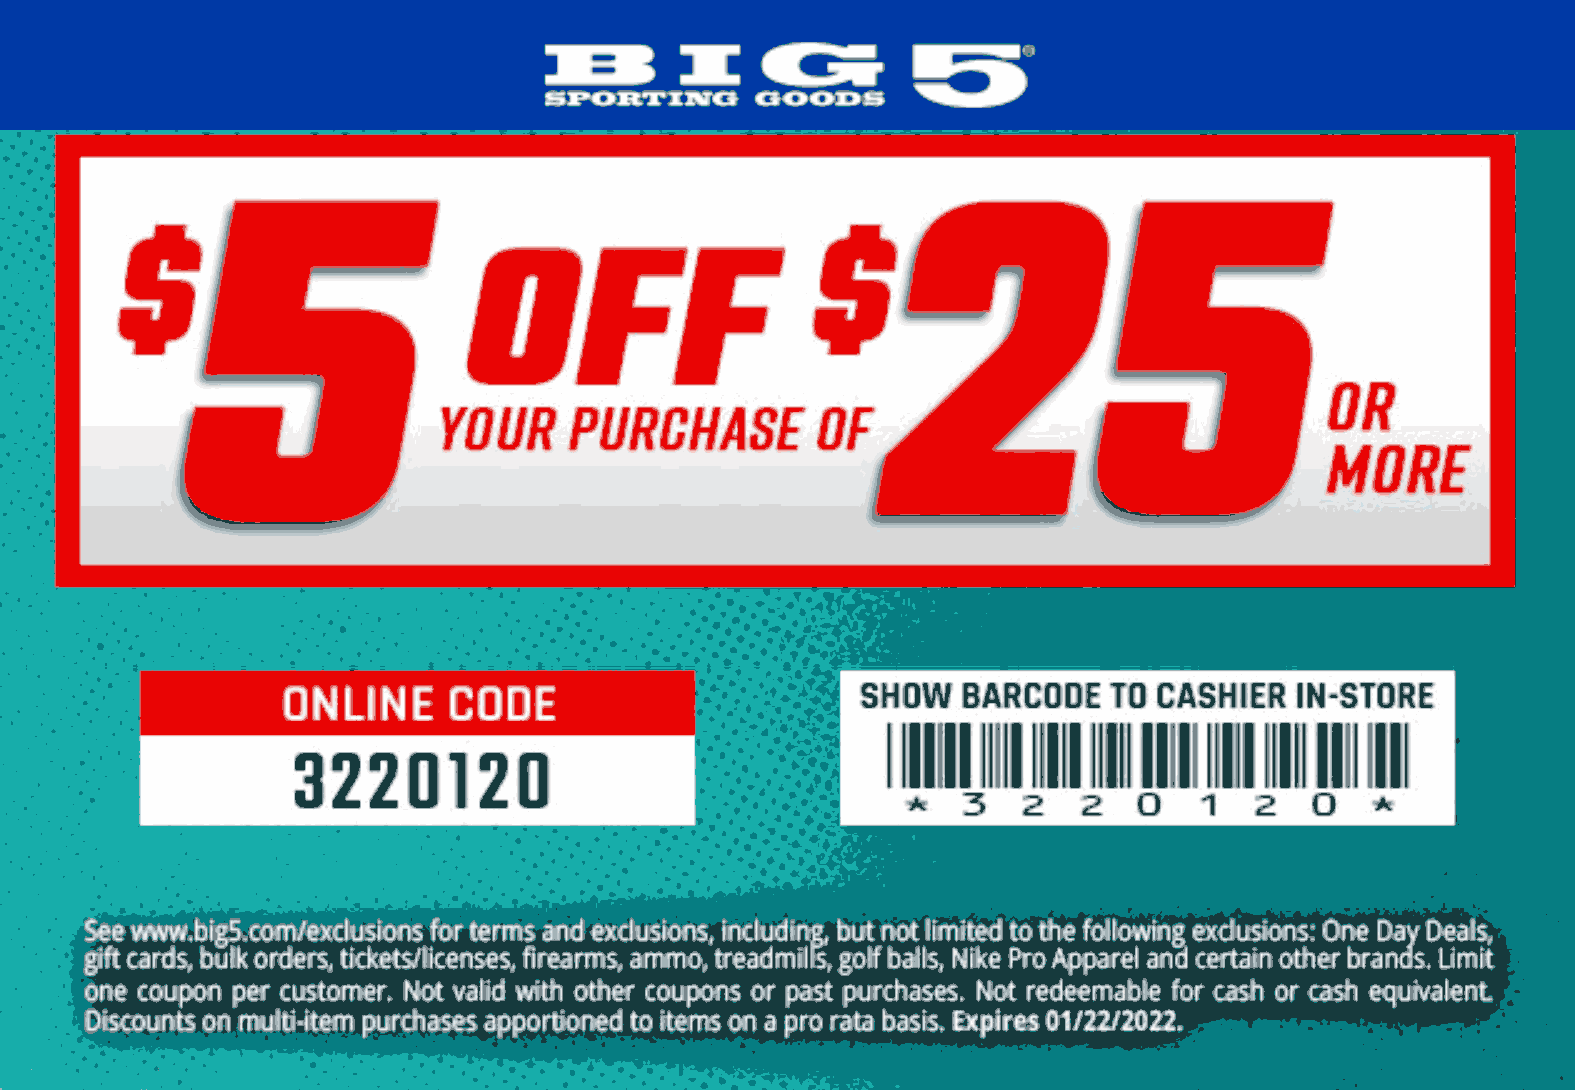 Big 5 stores Coupon  $5 off $25 at Big 5 Sporting Goods, or online via promo code 3220120 #big5 